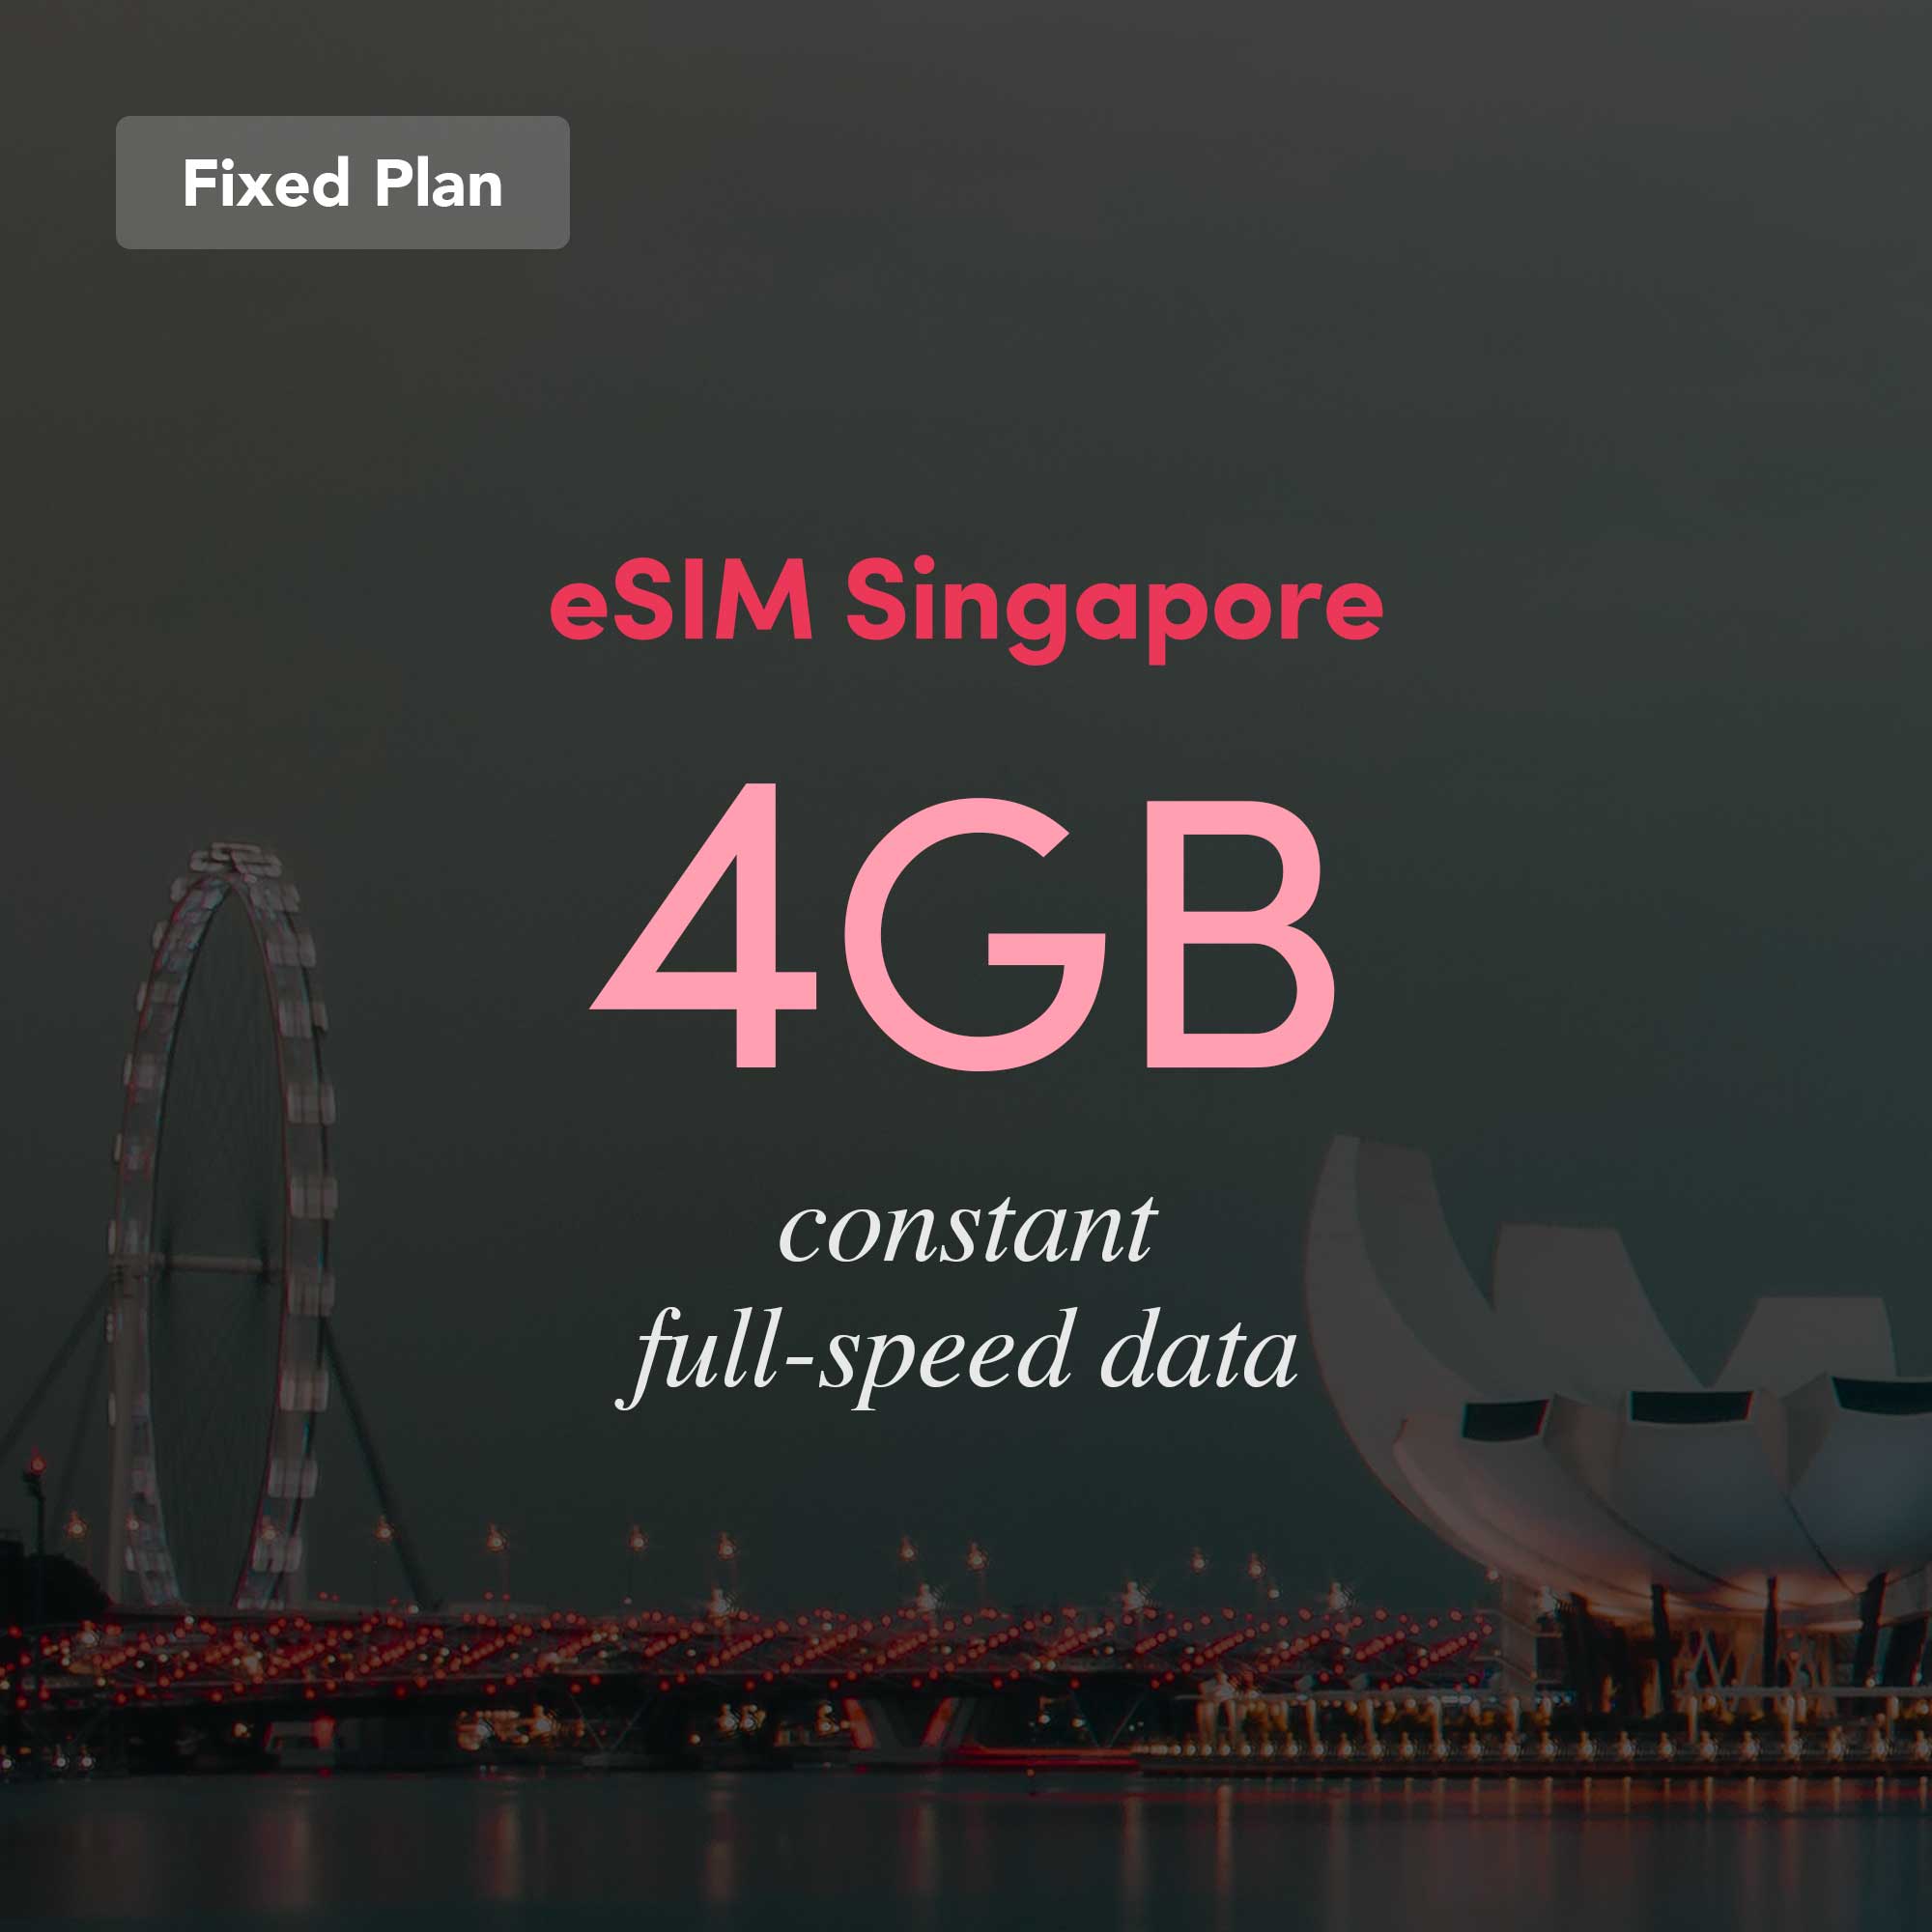 eSIM Singapore Fixed Plan 4GB